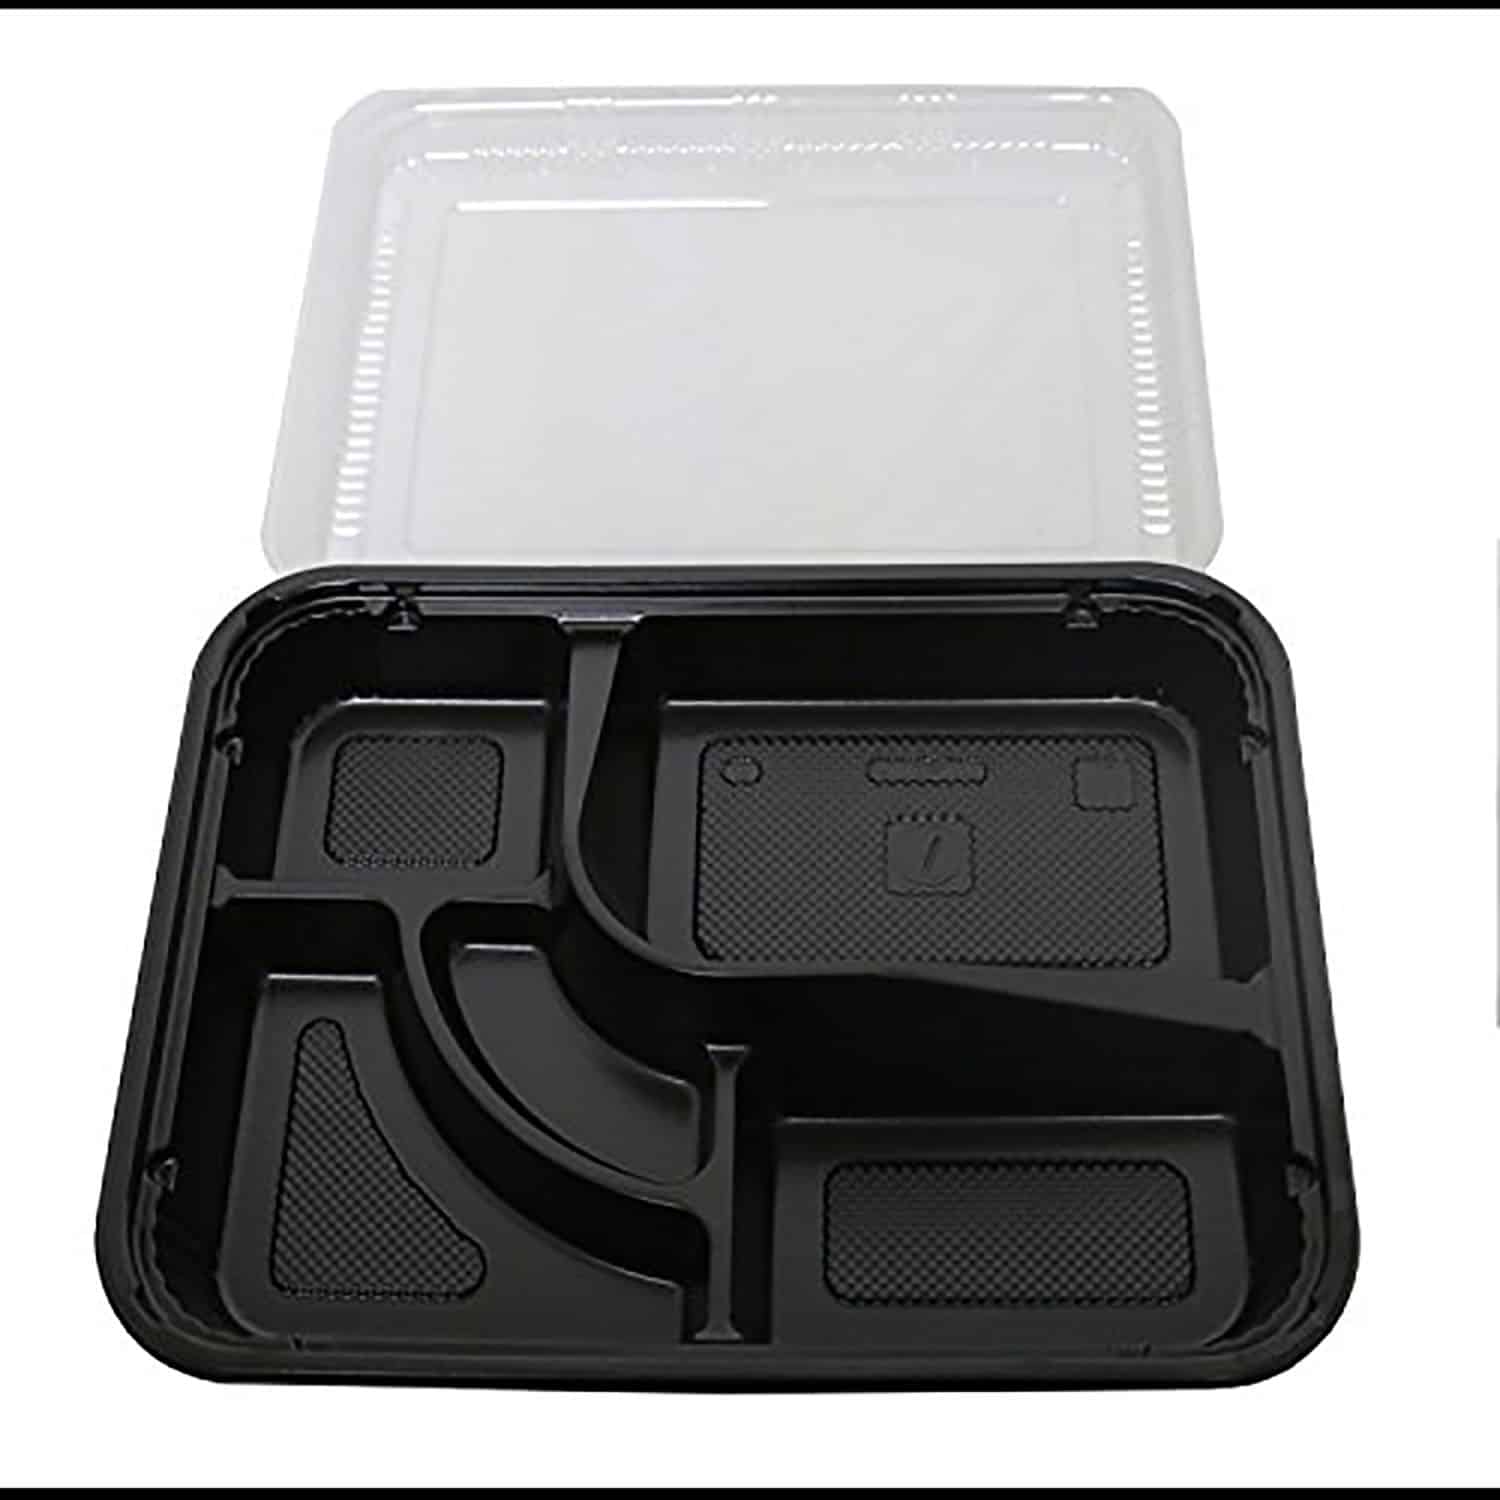 Bento box - 5 tray (JT8306) - Bento Box & More